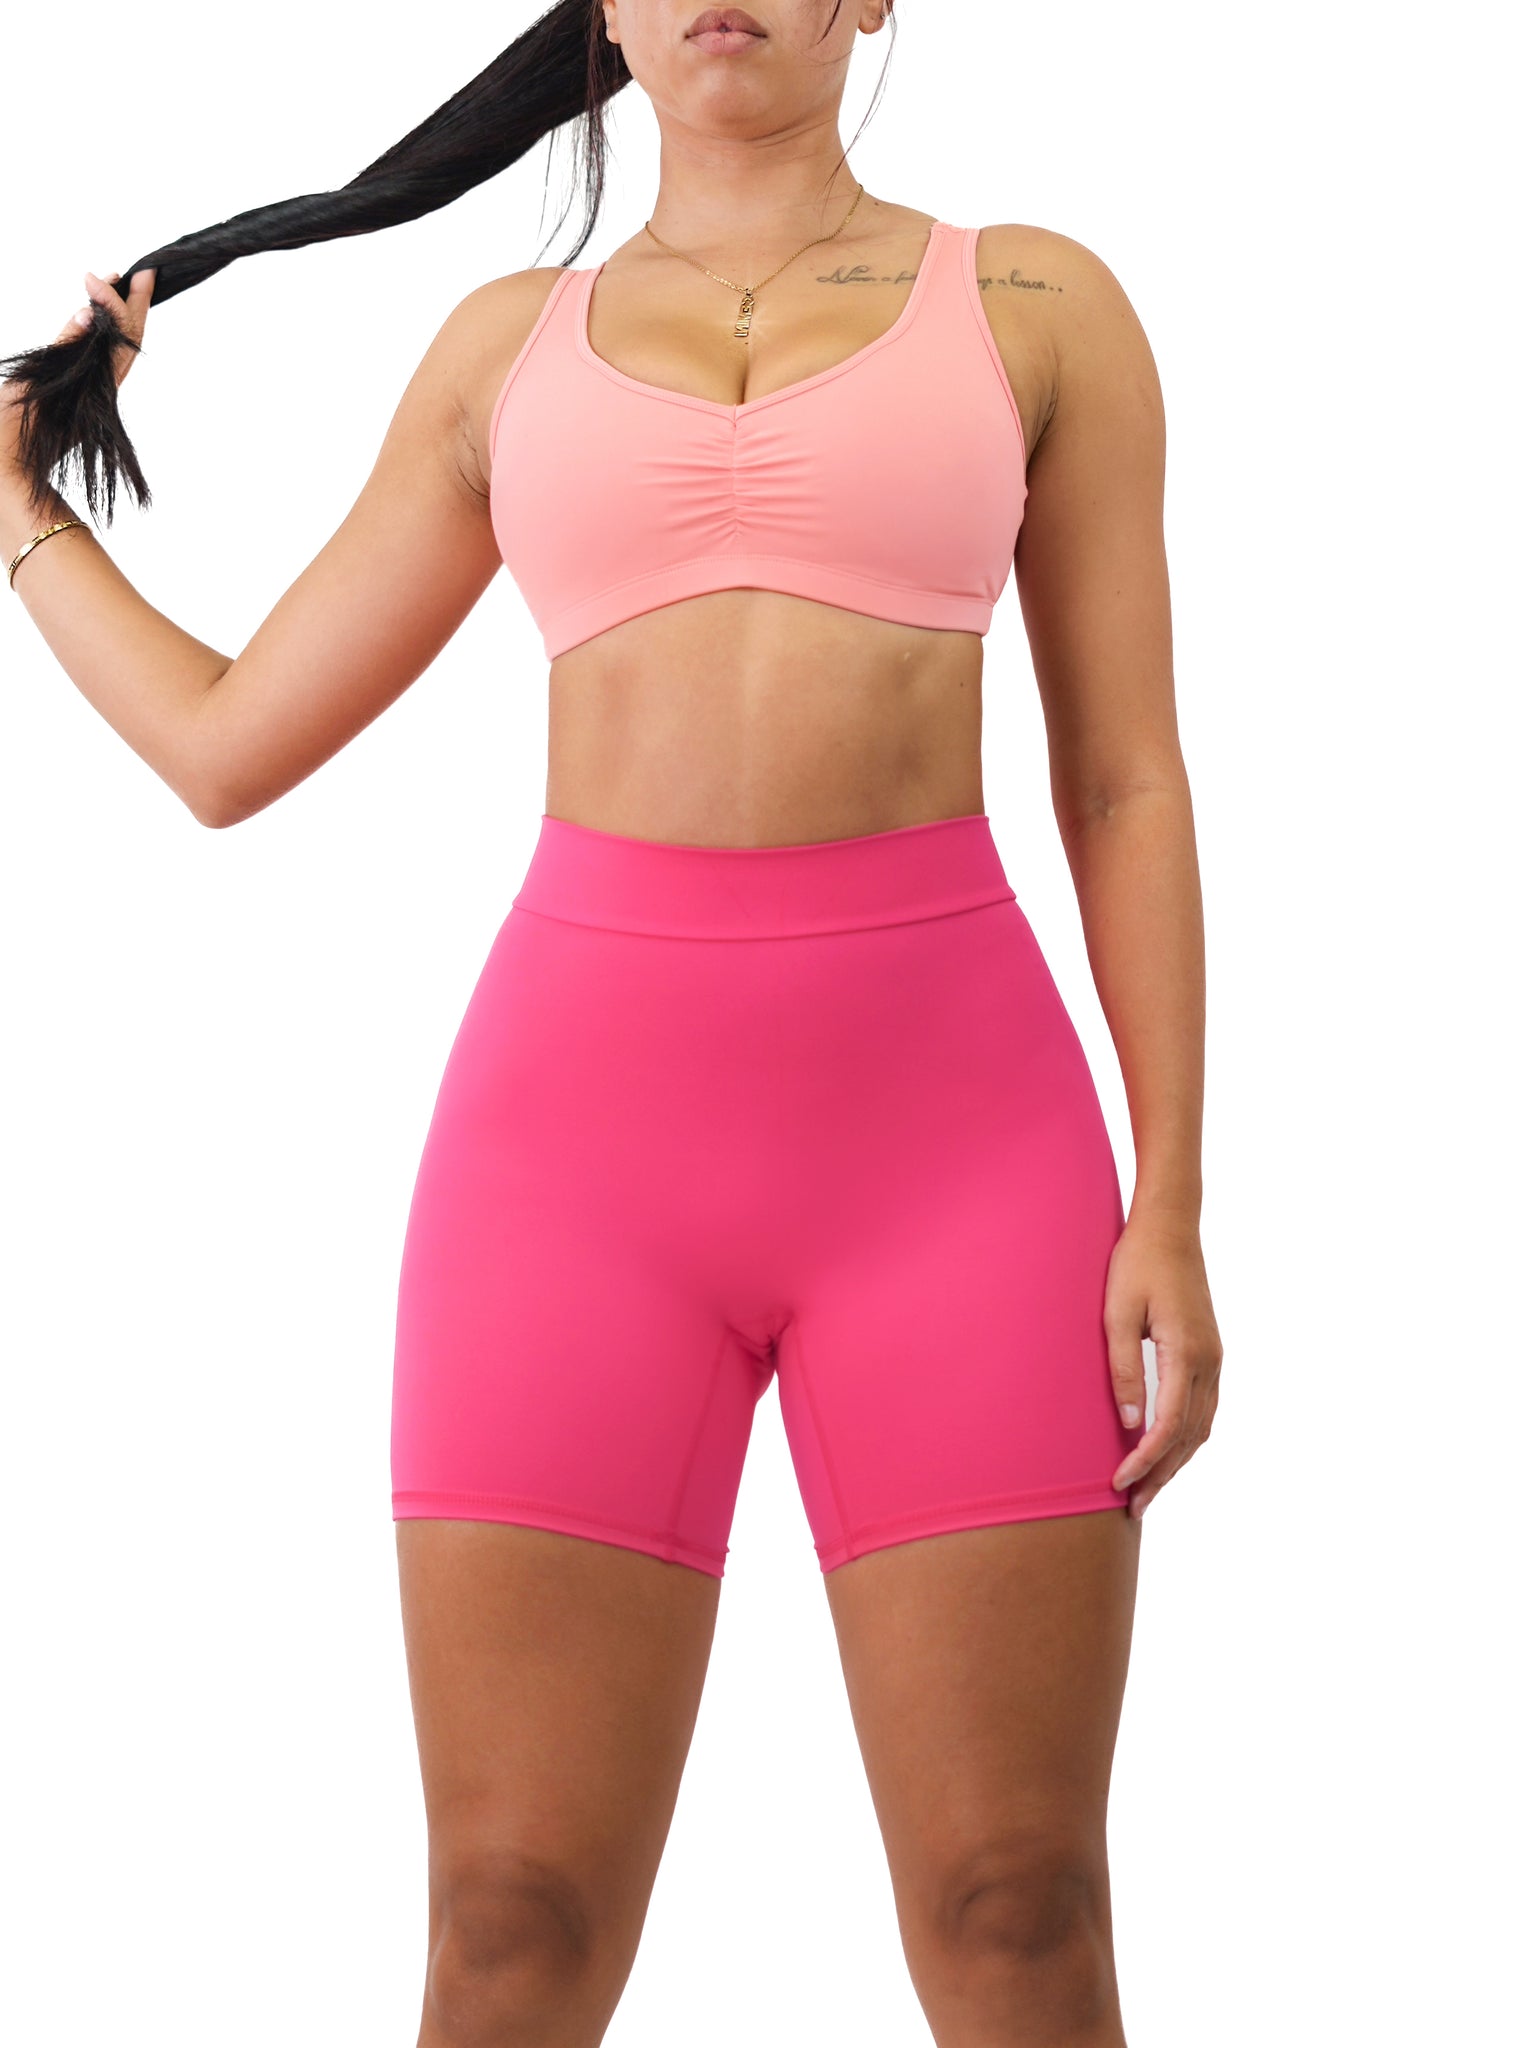 Athletic Scrunch Sports Bra (Pretty Pink)